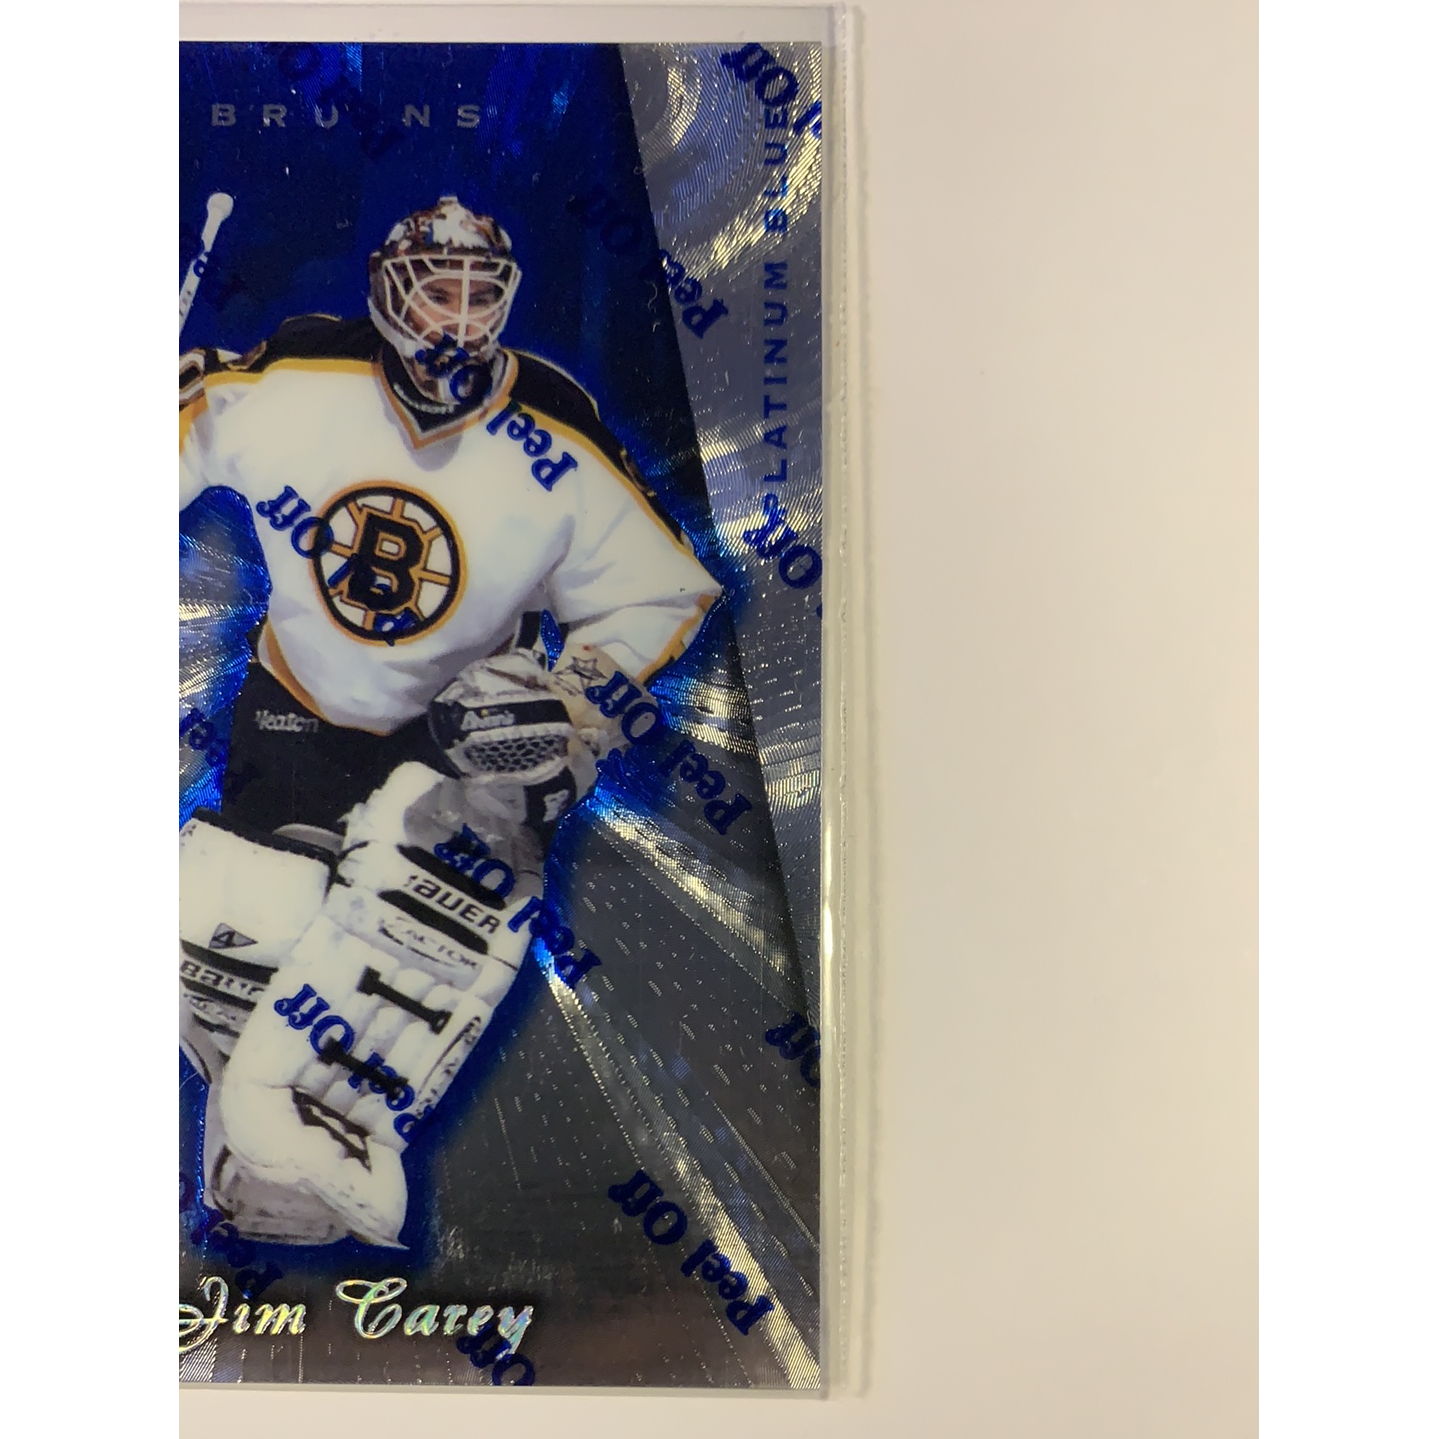  1997-98 Pinnacle Certified Jim Carey Platinum blue /2599  Local Legends Cards & Collectibles